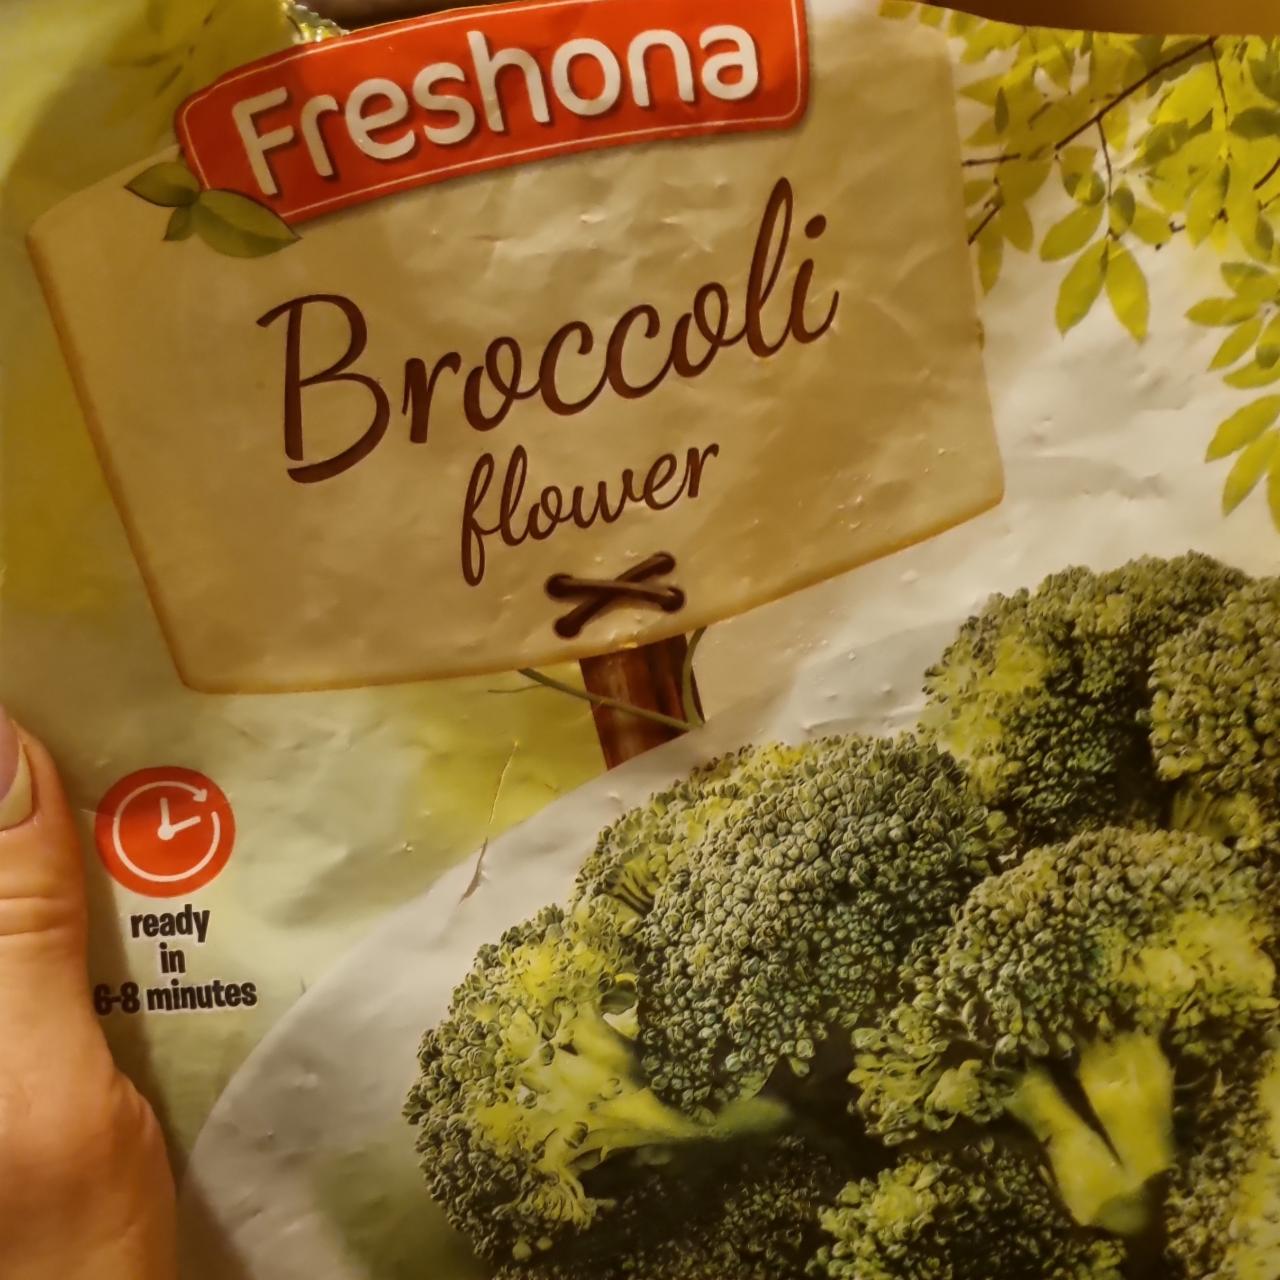 Képek - Broccoli flower Freshona